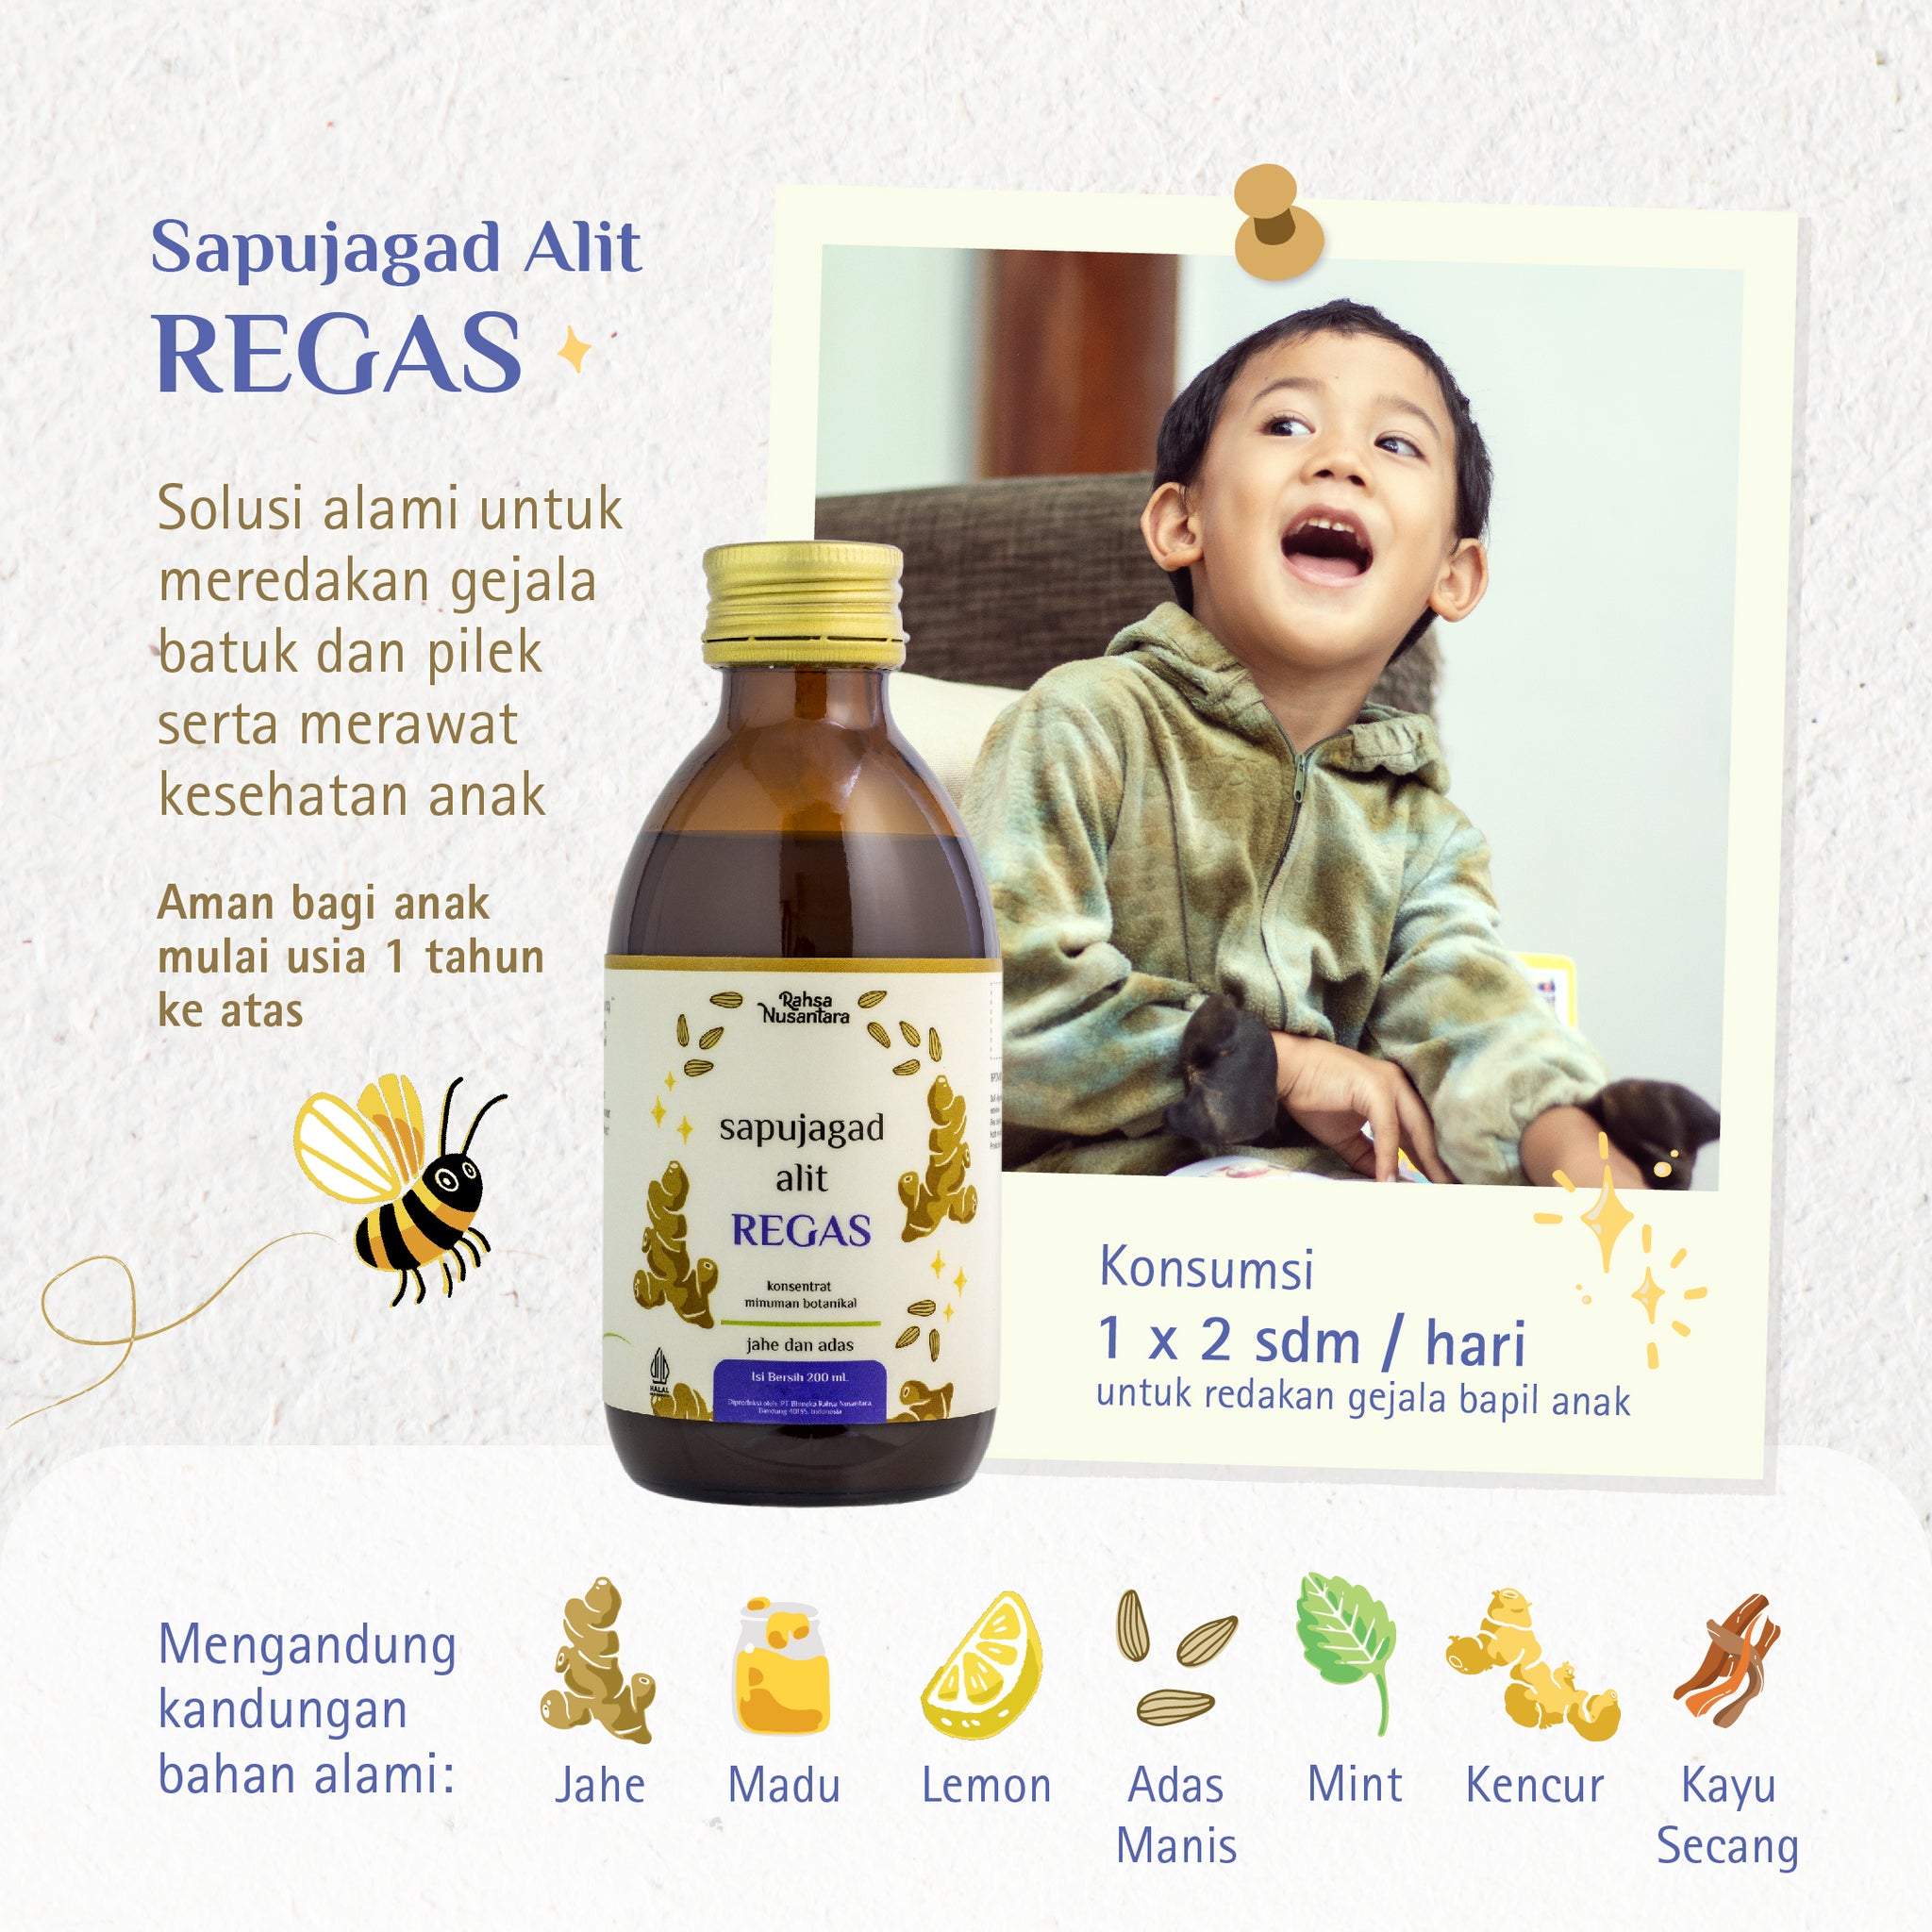 Sapujagad Alit REGAS | BPOM - Ramuan Herbal Alami Flu Batuk Pilek | by Rahsa Nusantara